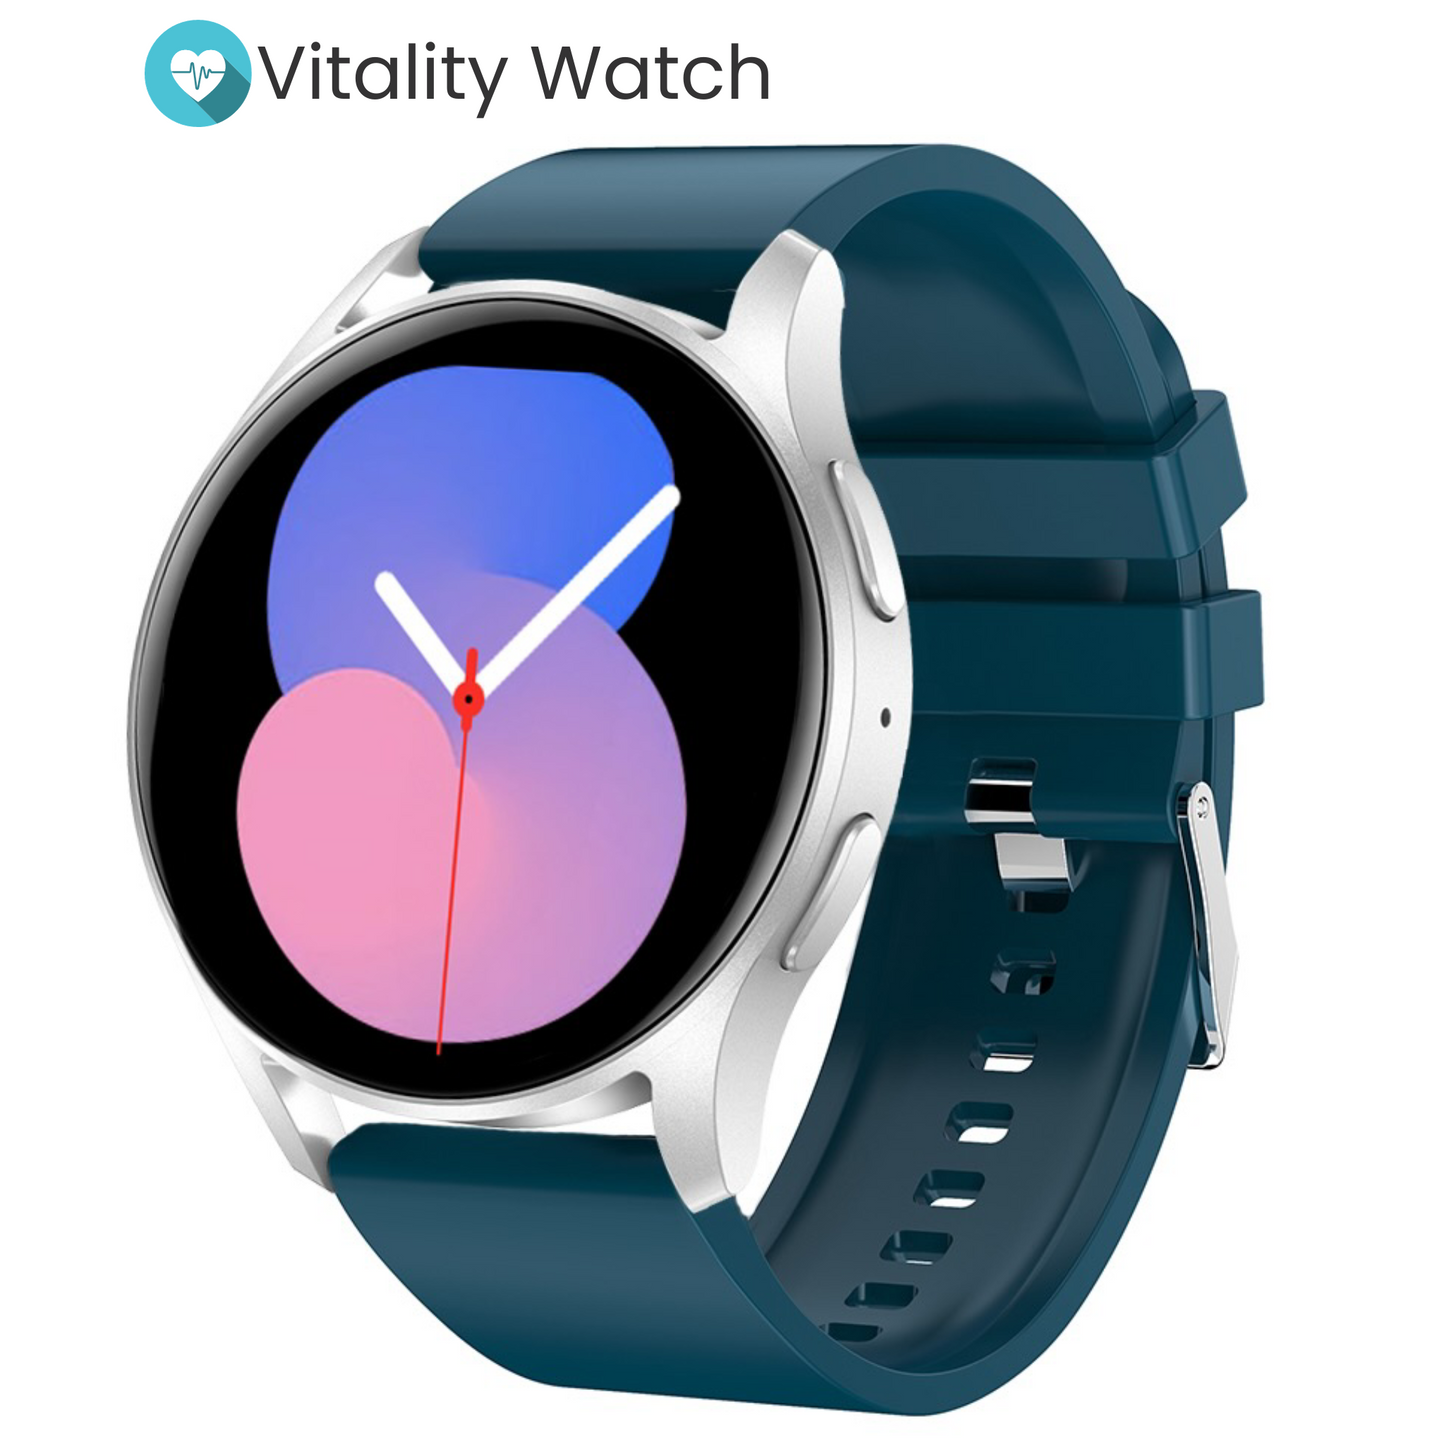 Vitality Watch